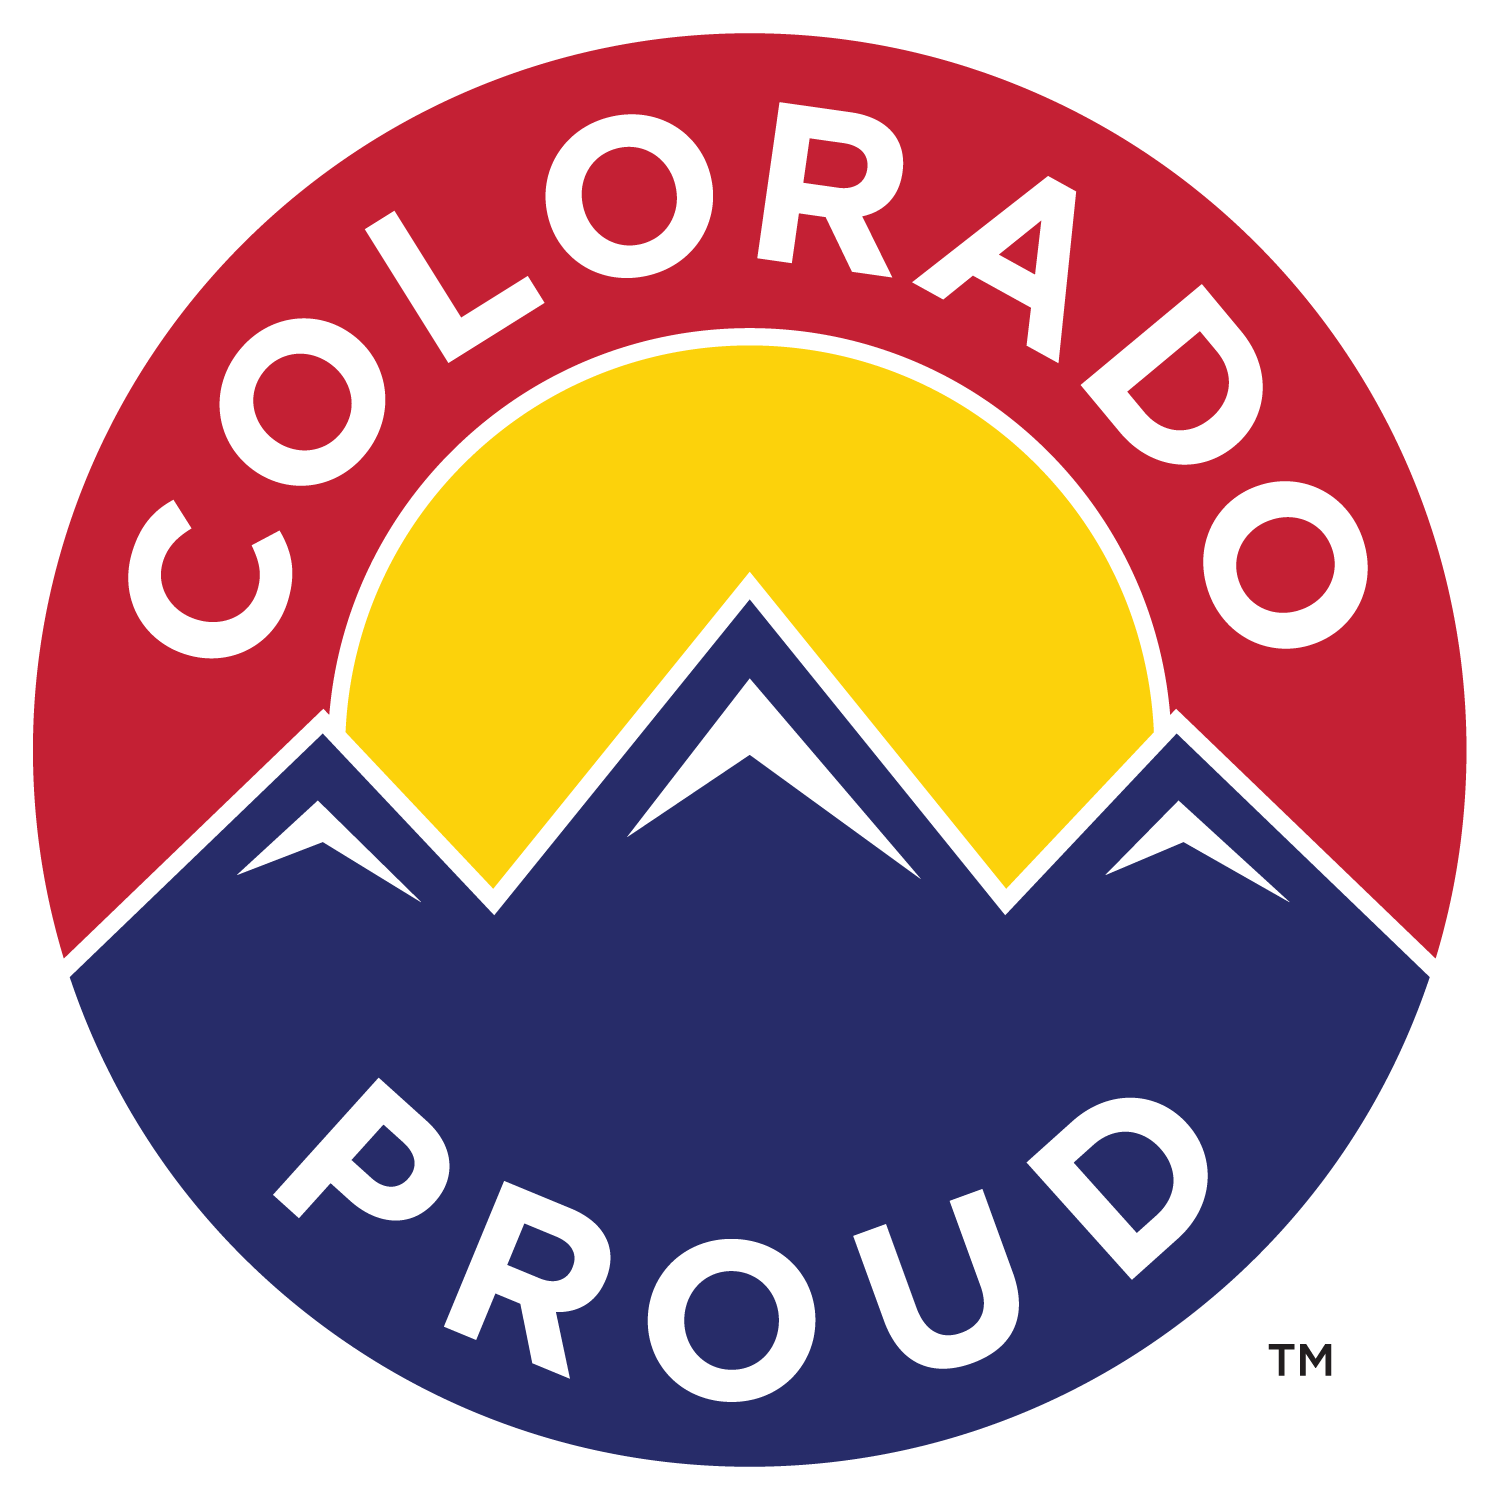 Royal Crest is a Colorado Proud member.